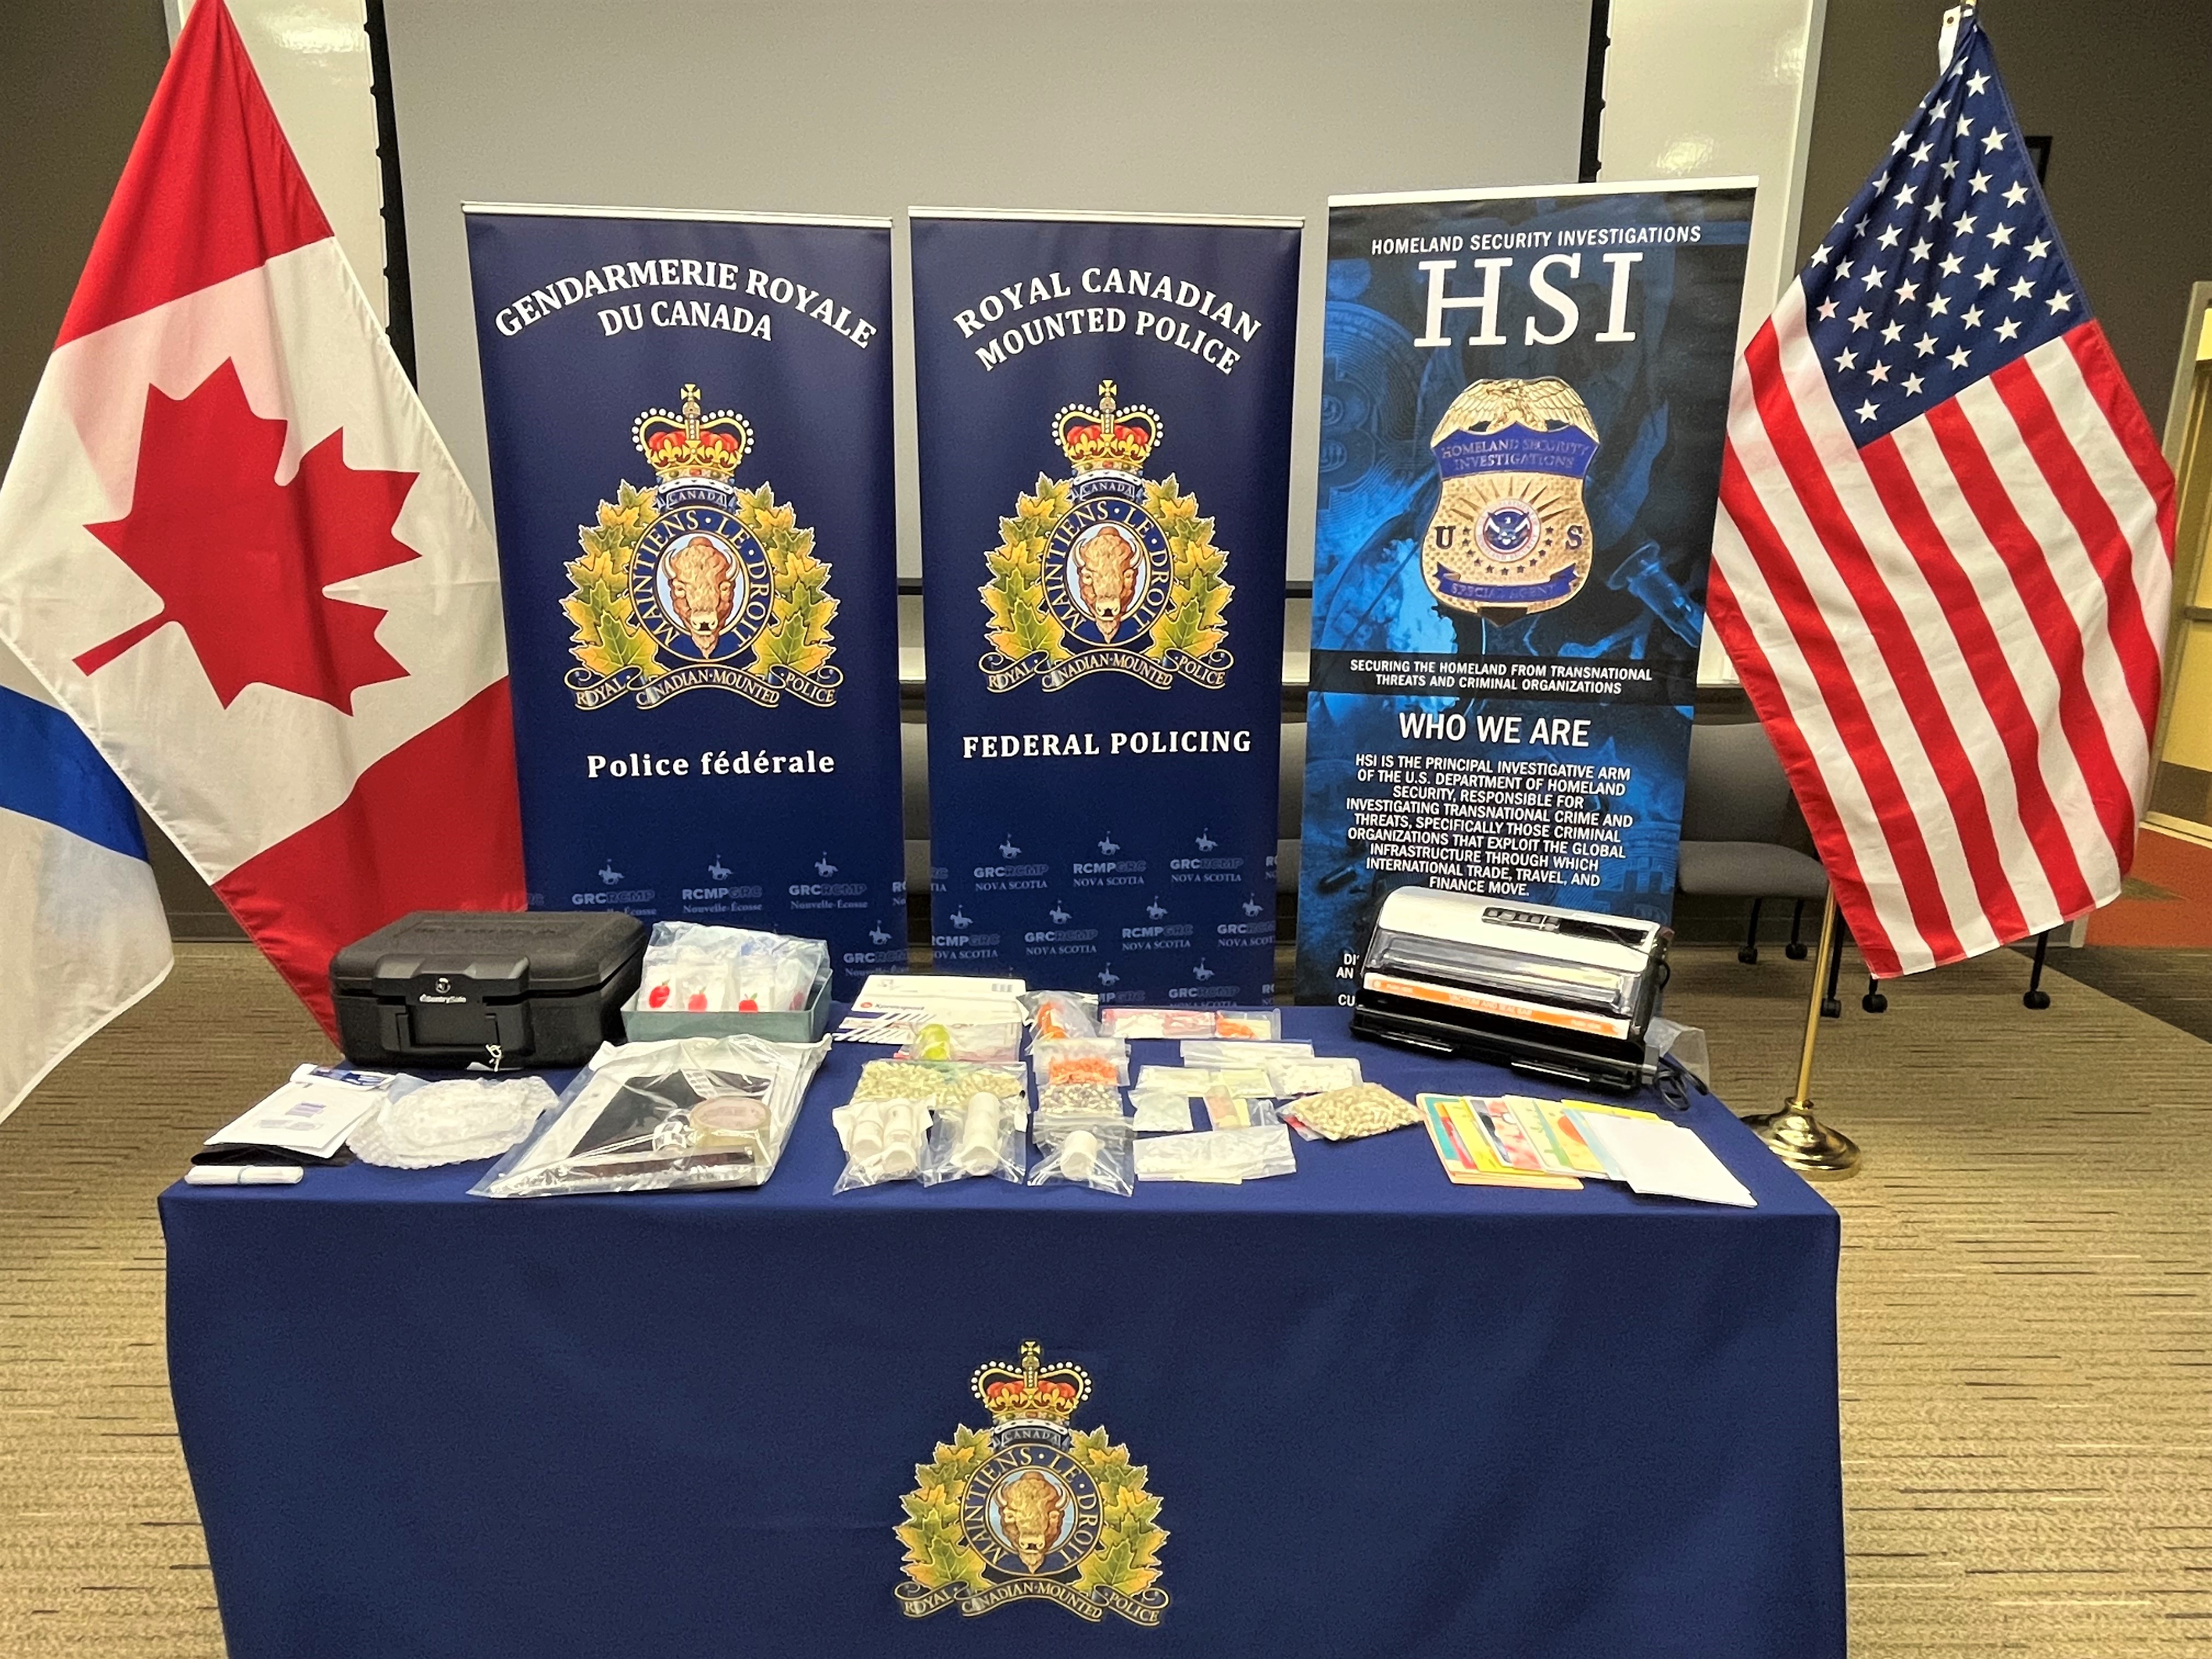 Halifax man accused of selling drugs internationally on dark web, U.S. homeland security involved